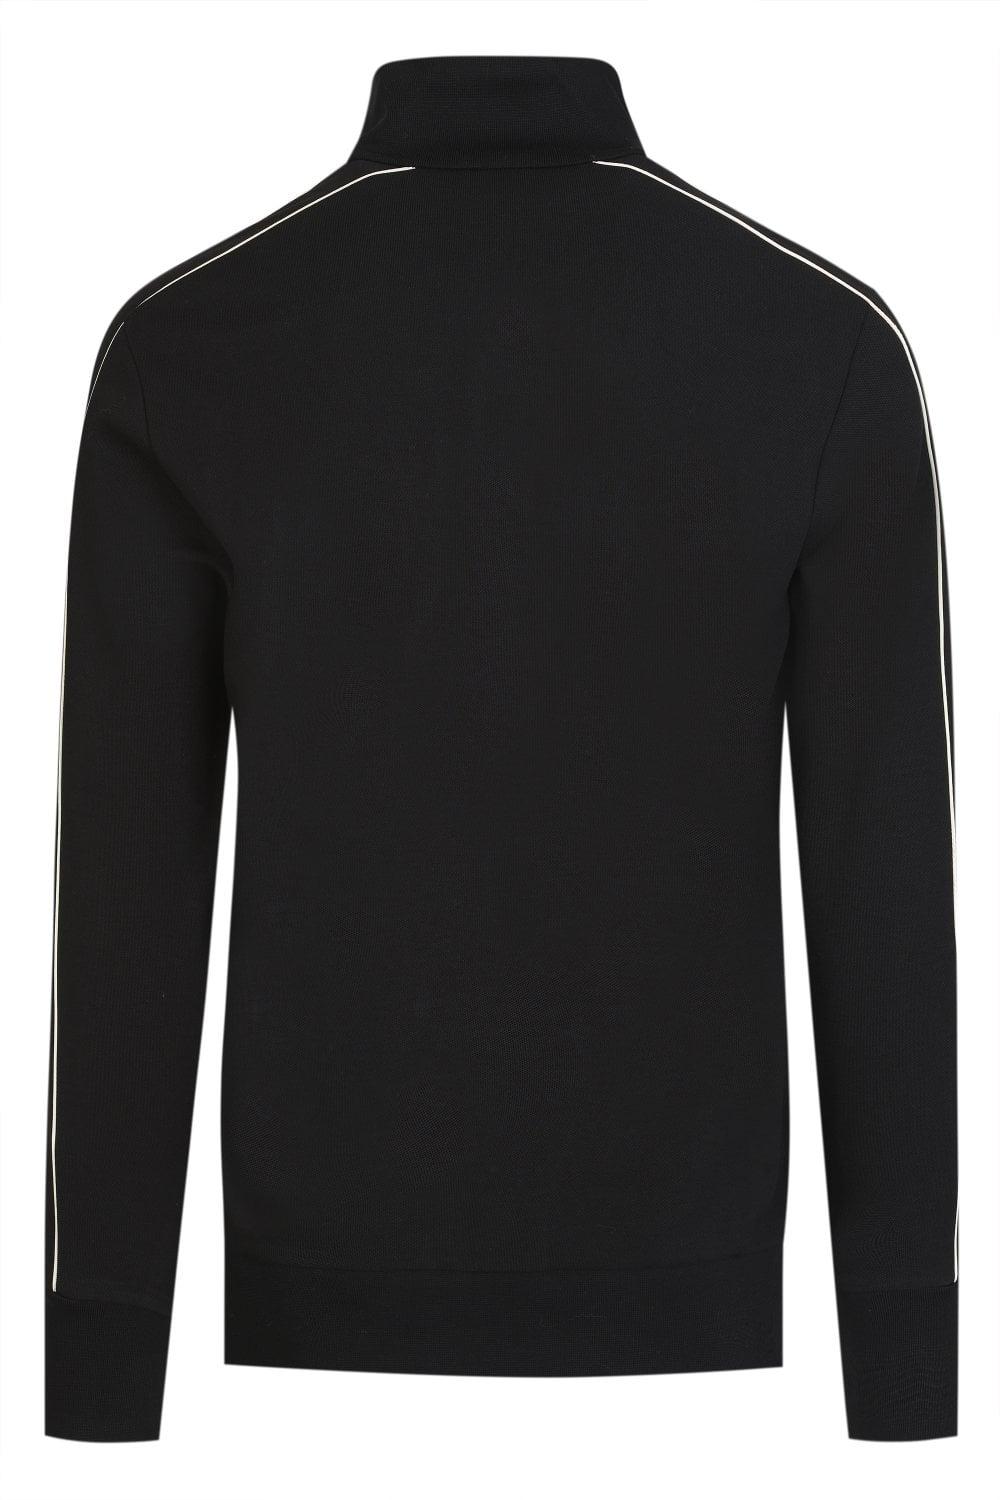 BOSS by HUGO BOSS Sommers 39 Zip Jacket in Black for Men | Lyst